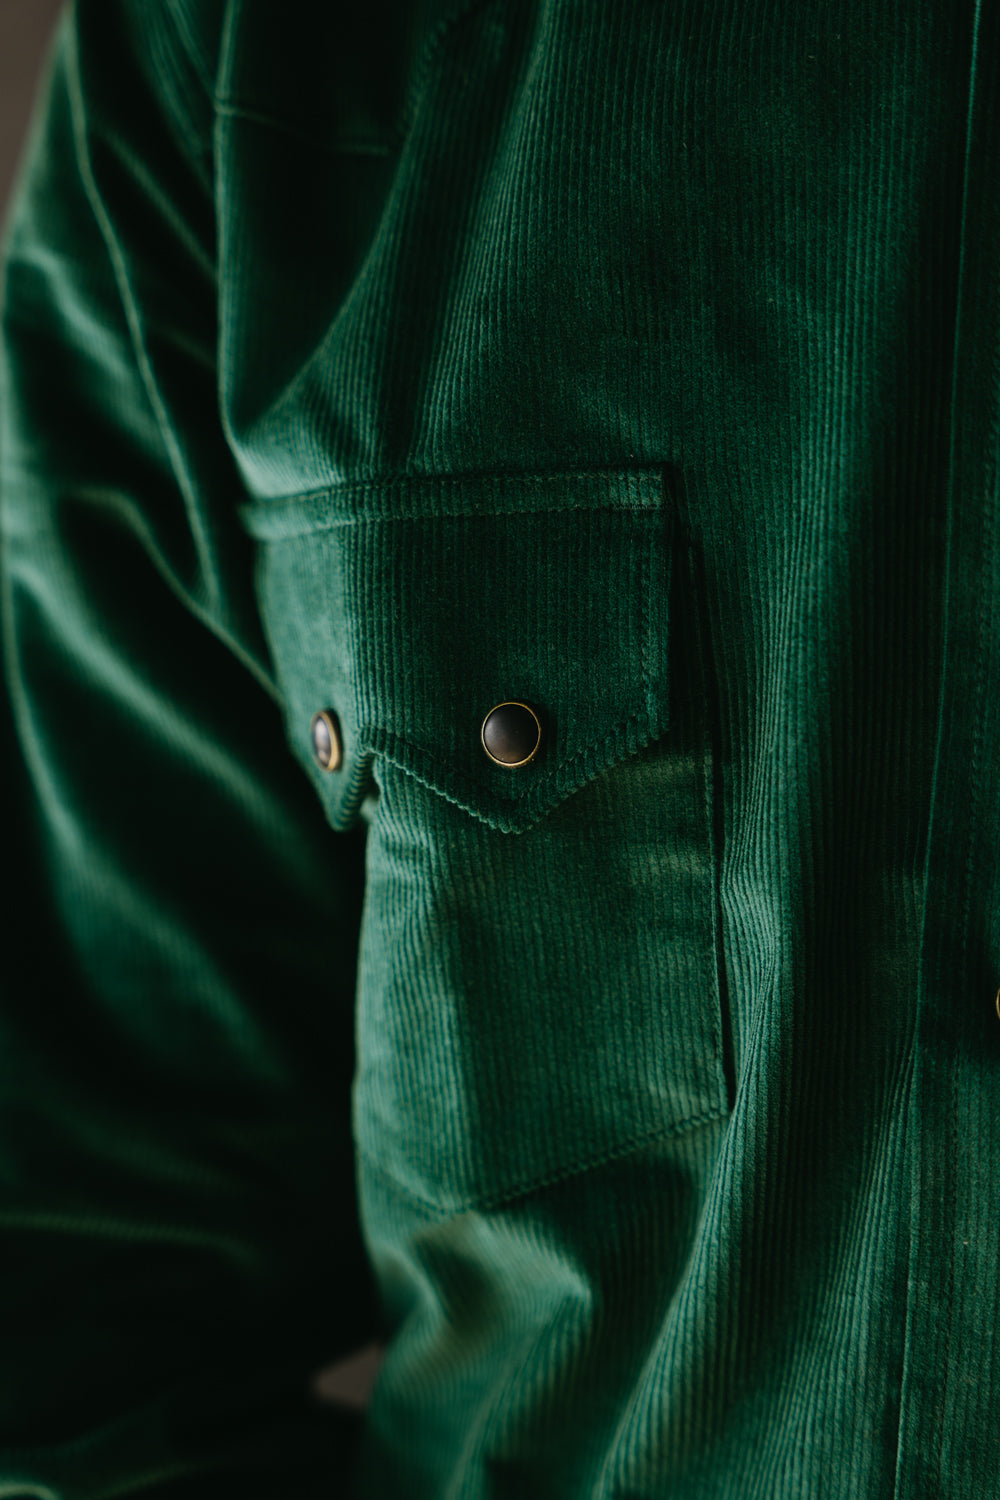 Dollard Sawtooth Shirt - Corduroy Green